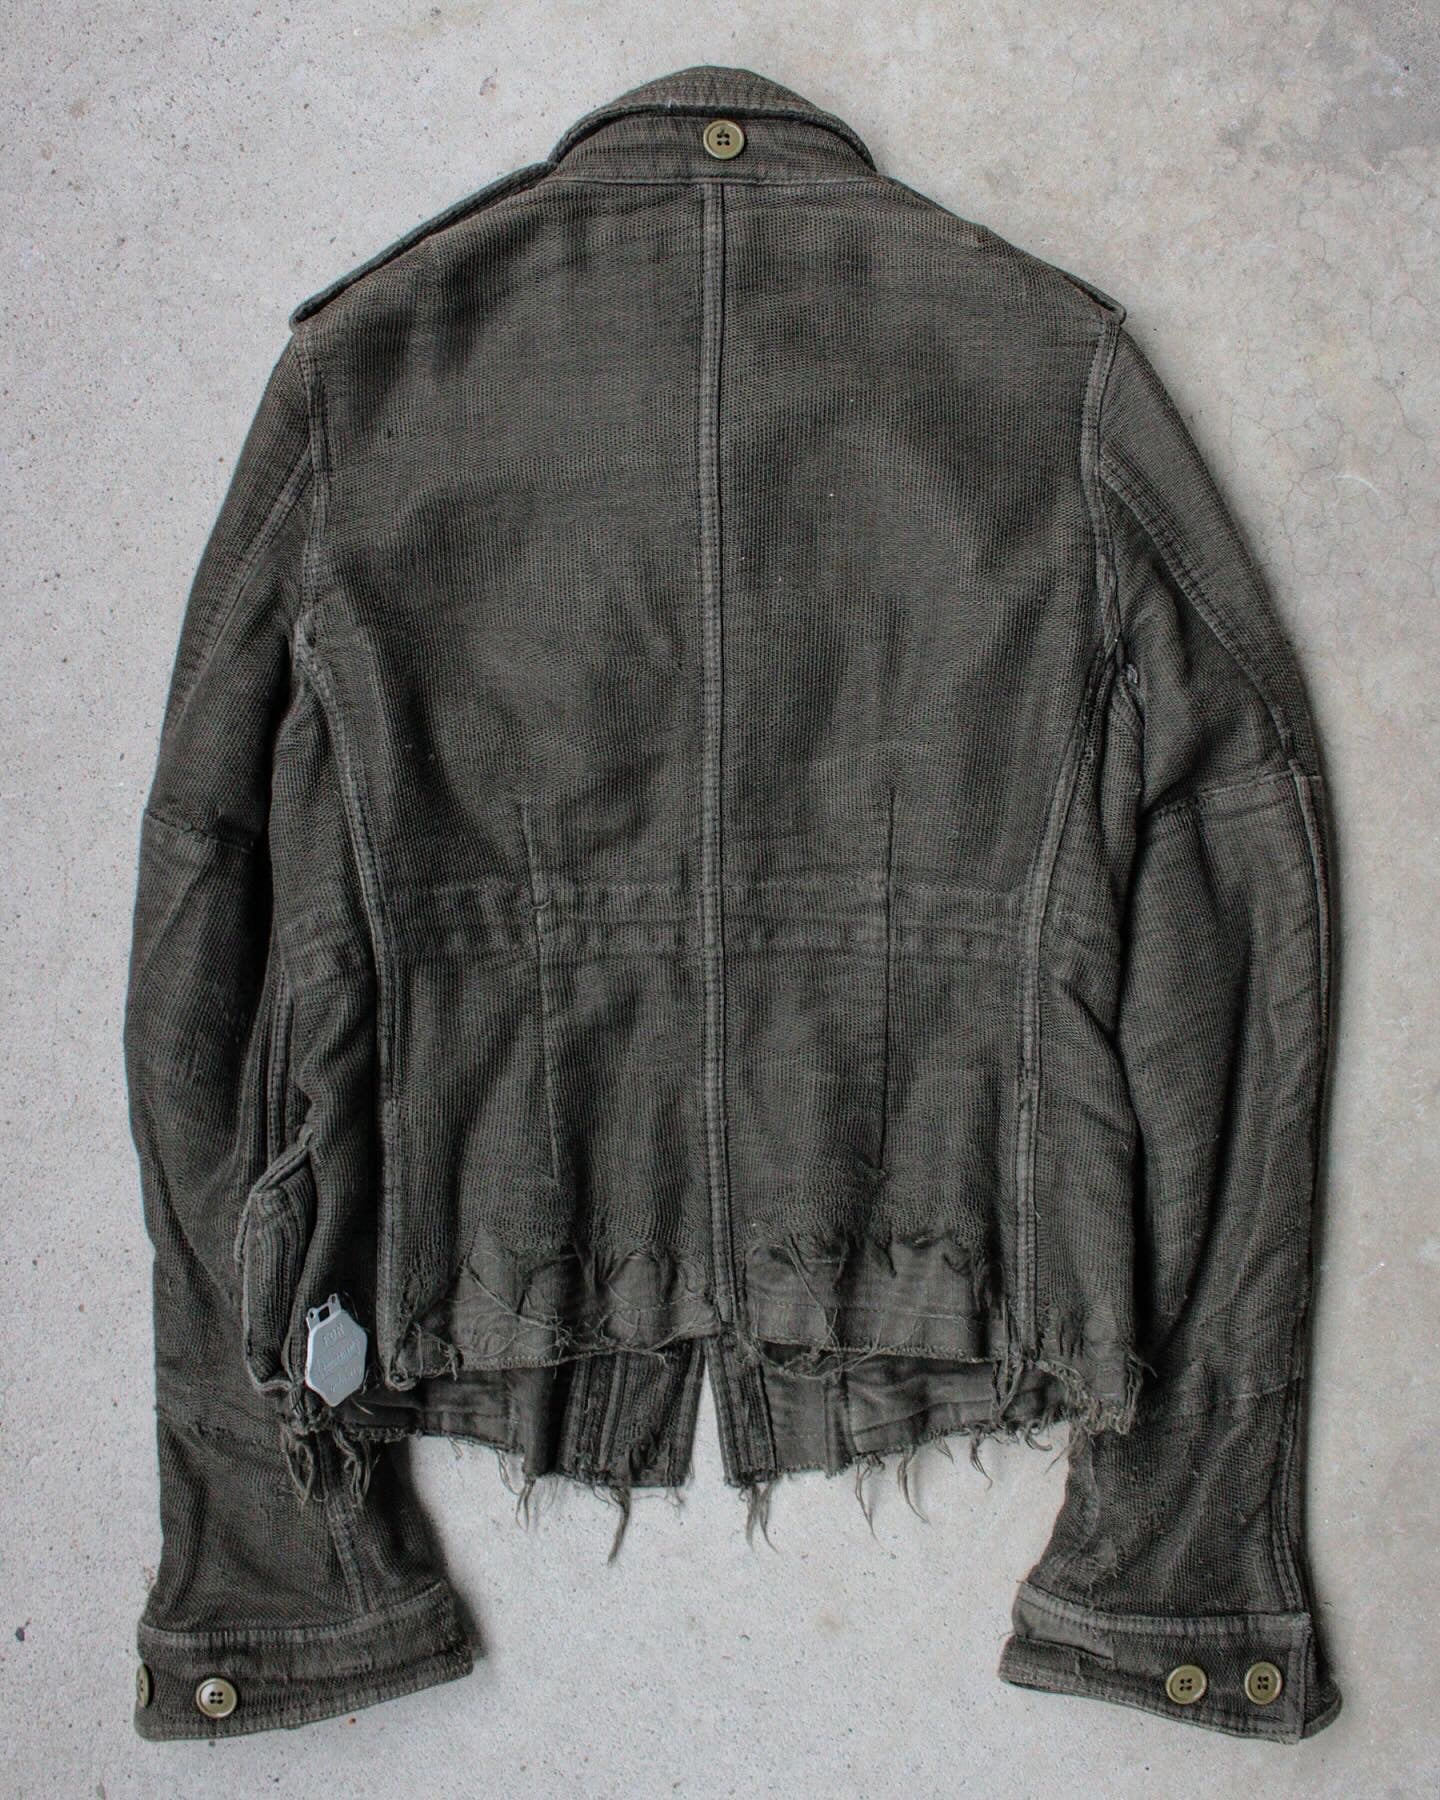 Mihara Yasuhiro AW05 Distressed Layered Mesh Military Jacket (Olive) full item detail shot